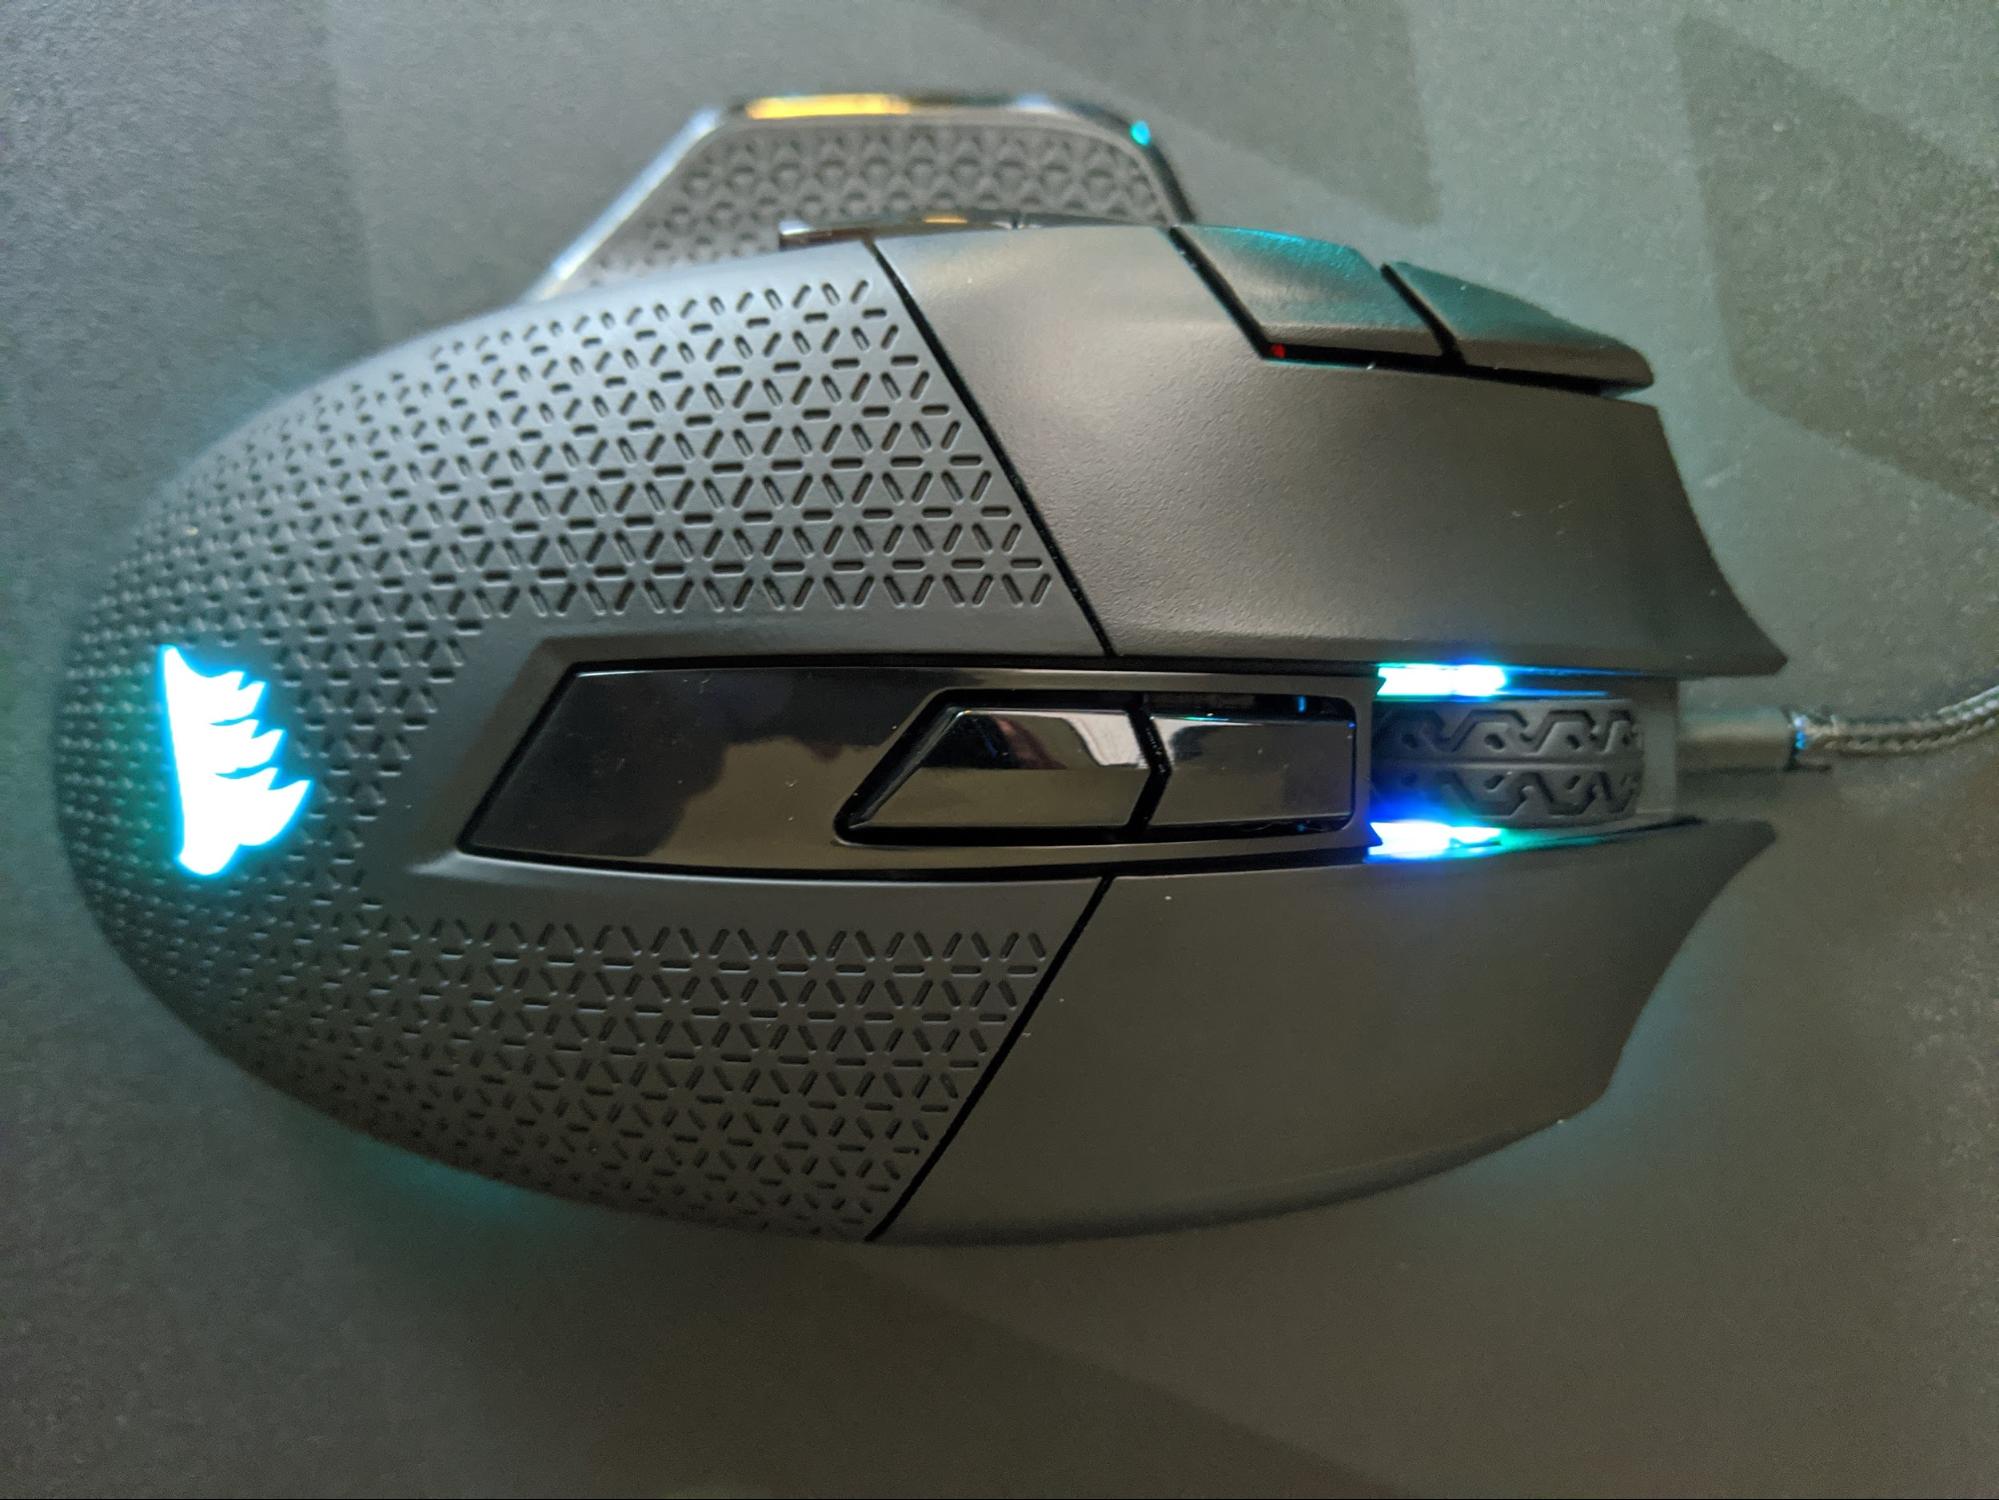  CORSAIR NIGHTSWORD RGB Gaming Mouse For FPS, MOBA